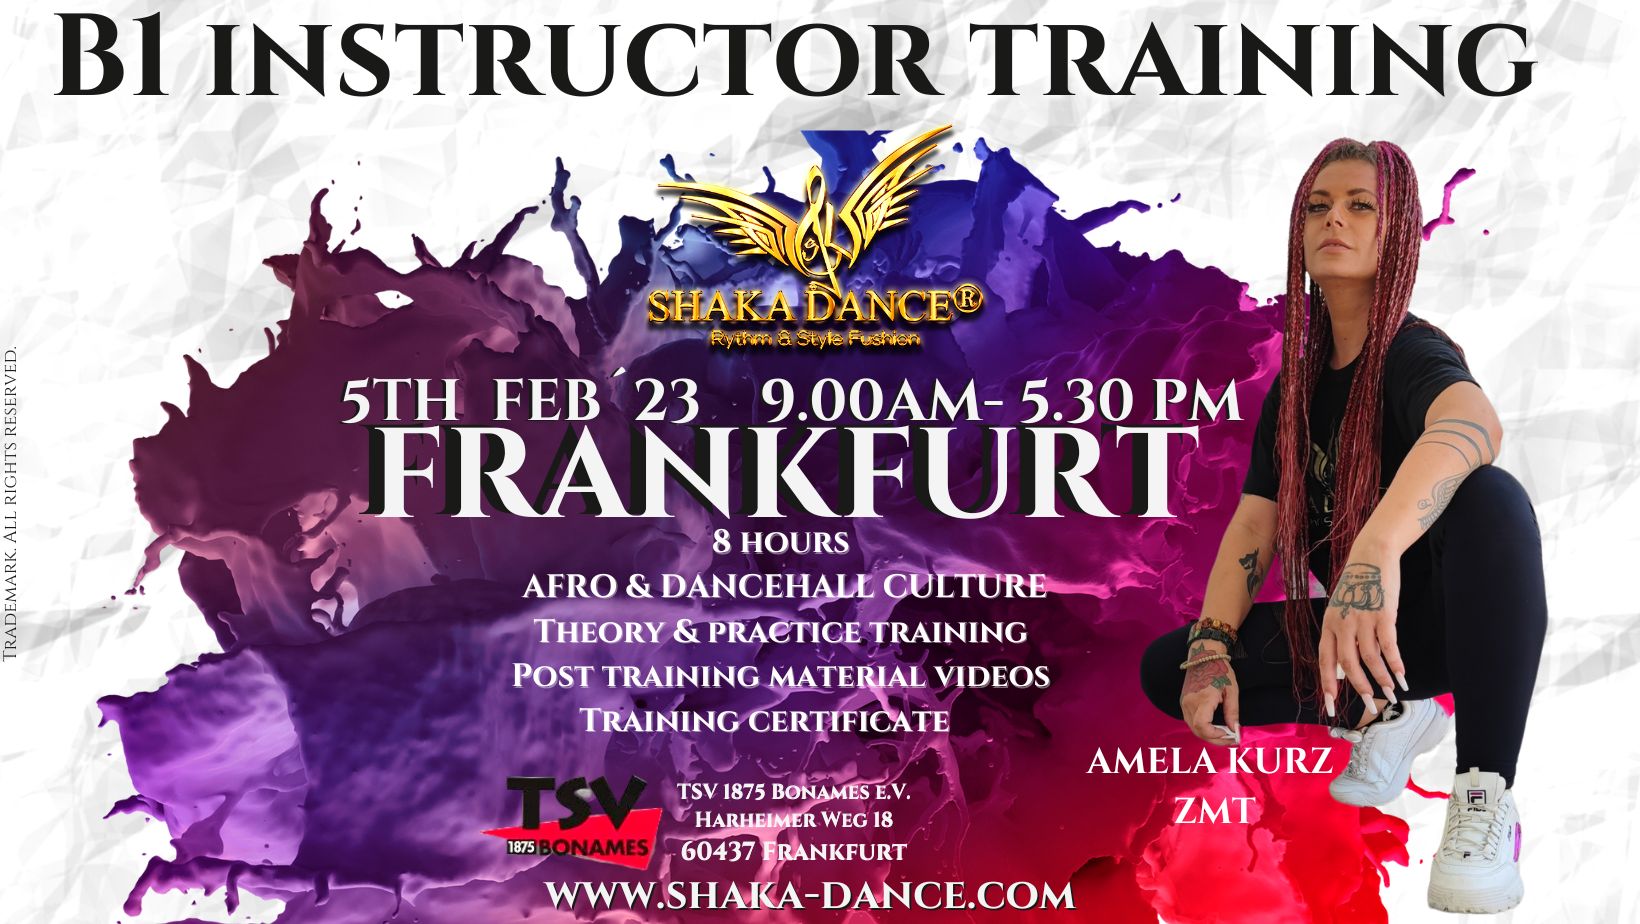 SHAKA DANCE® B1 INSTRUCTOR TRAINING – FRANKFURT